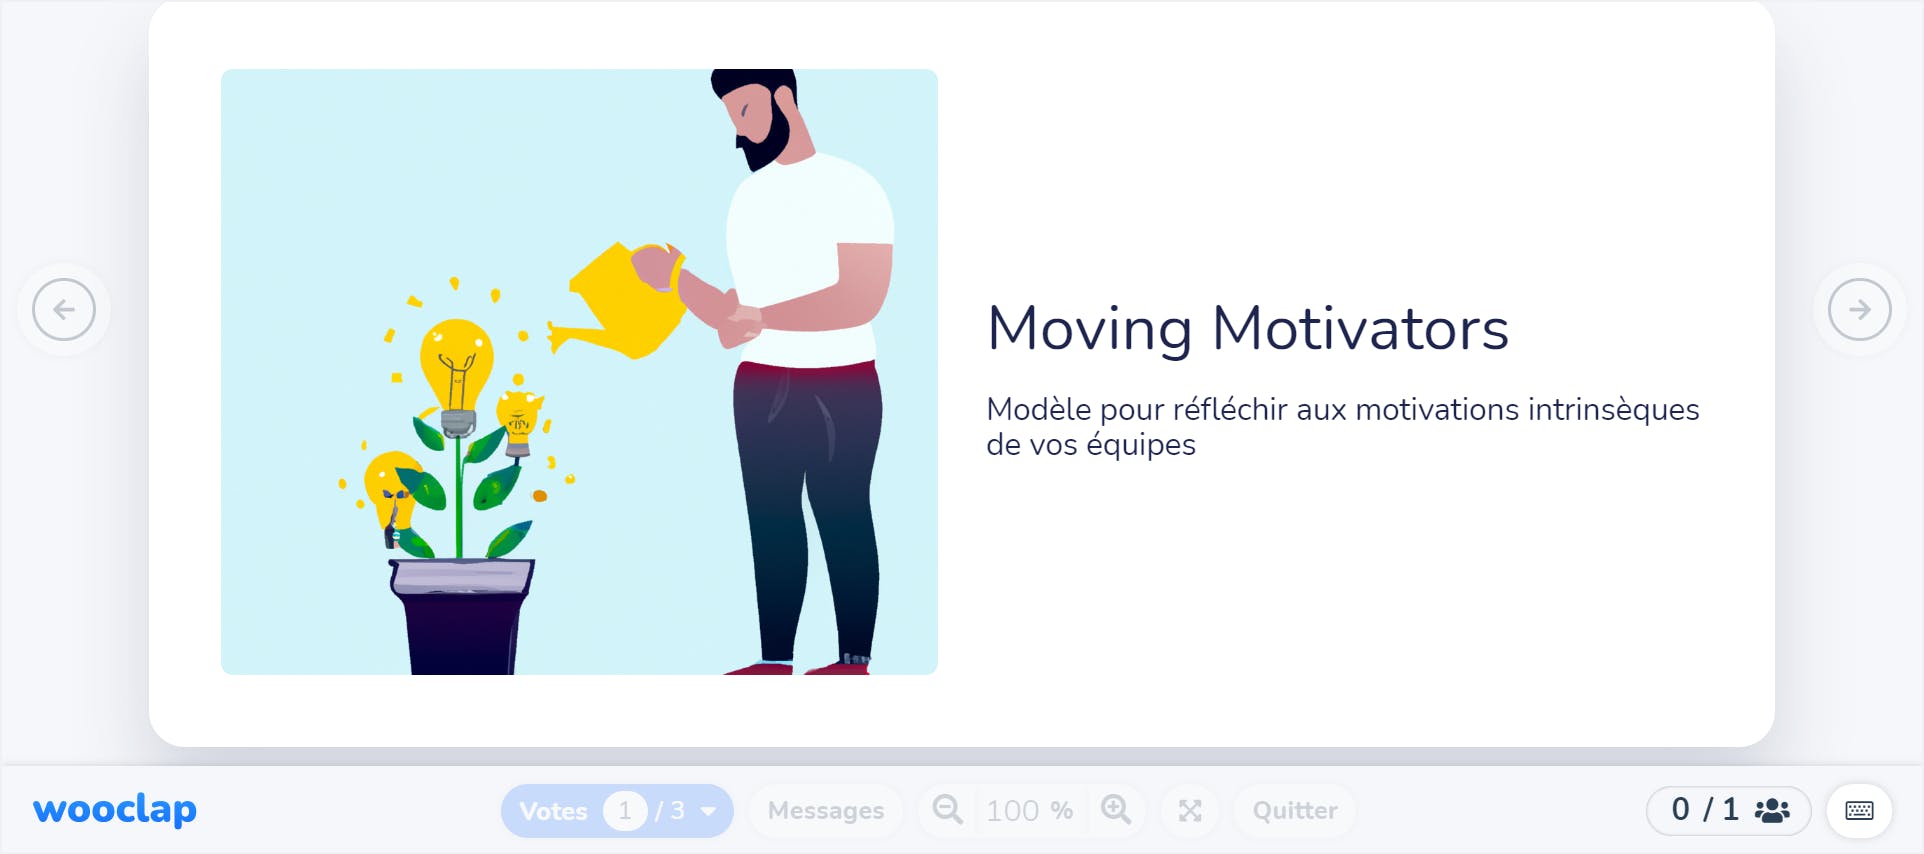 Moving motivators intro slide